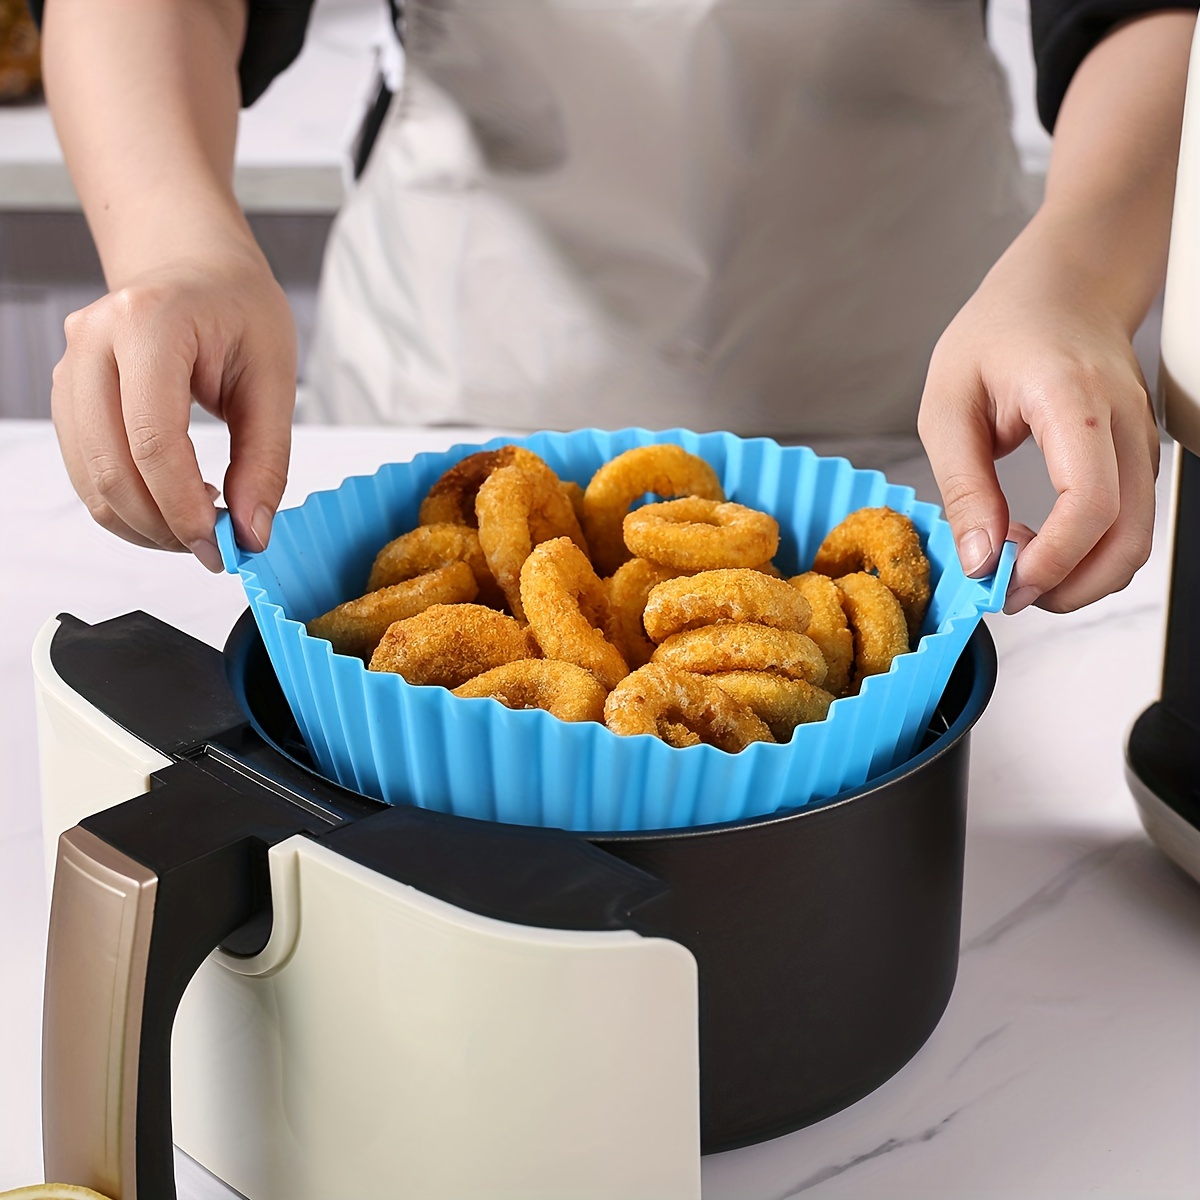  Air Fryer Silicone Pots, 2 Pieces Food Grade Reusable